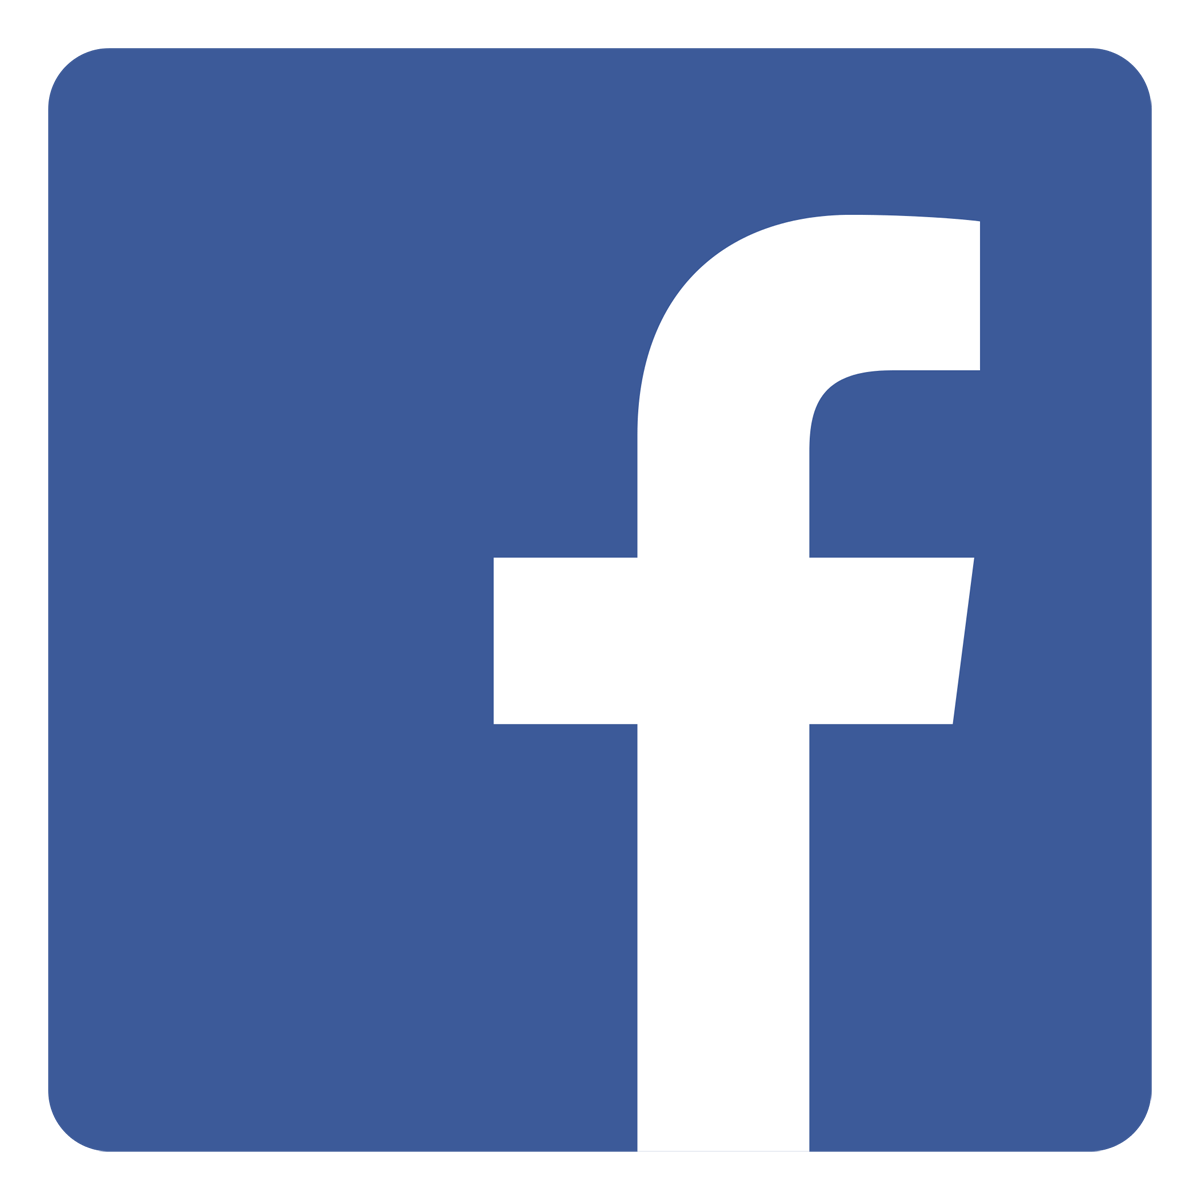 FB Logo - Facebook Logo, FB symbol meaning, History and Evolution